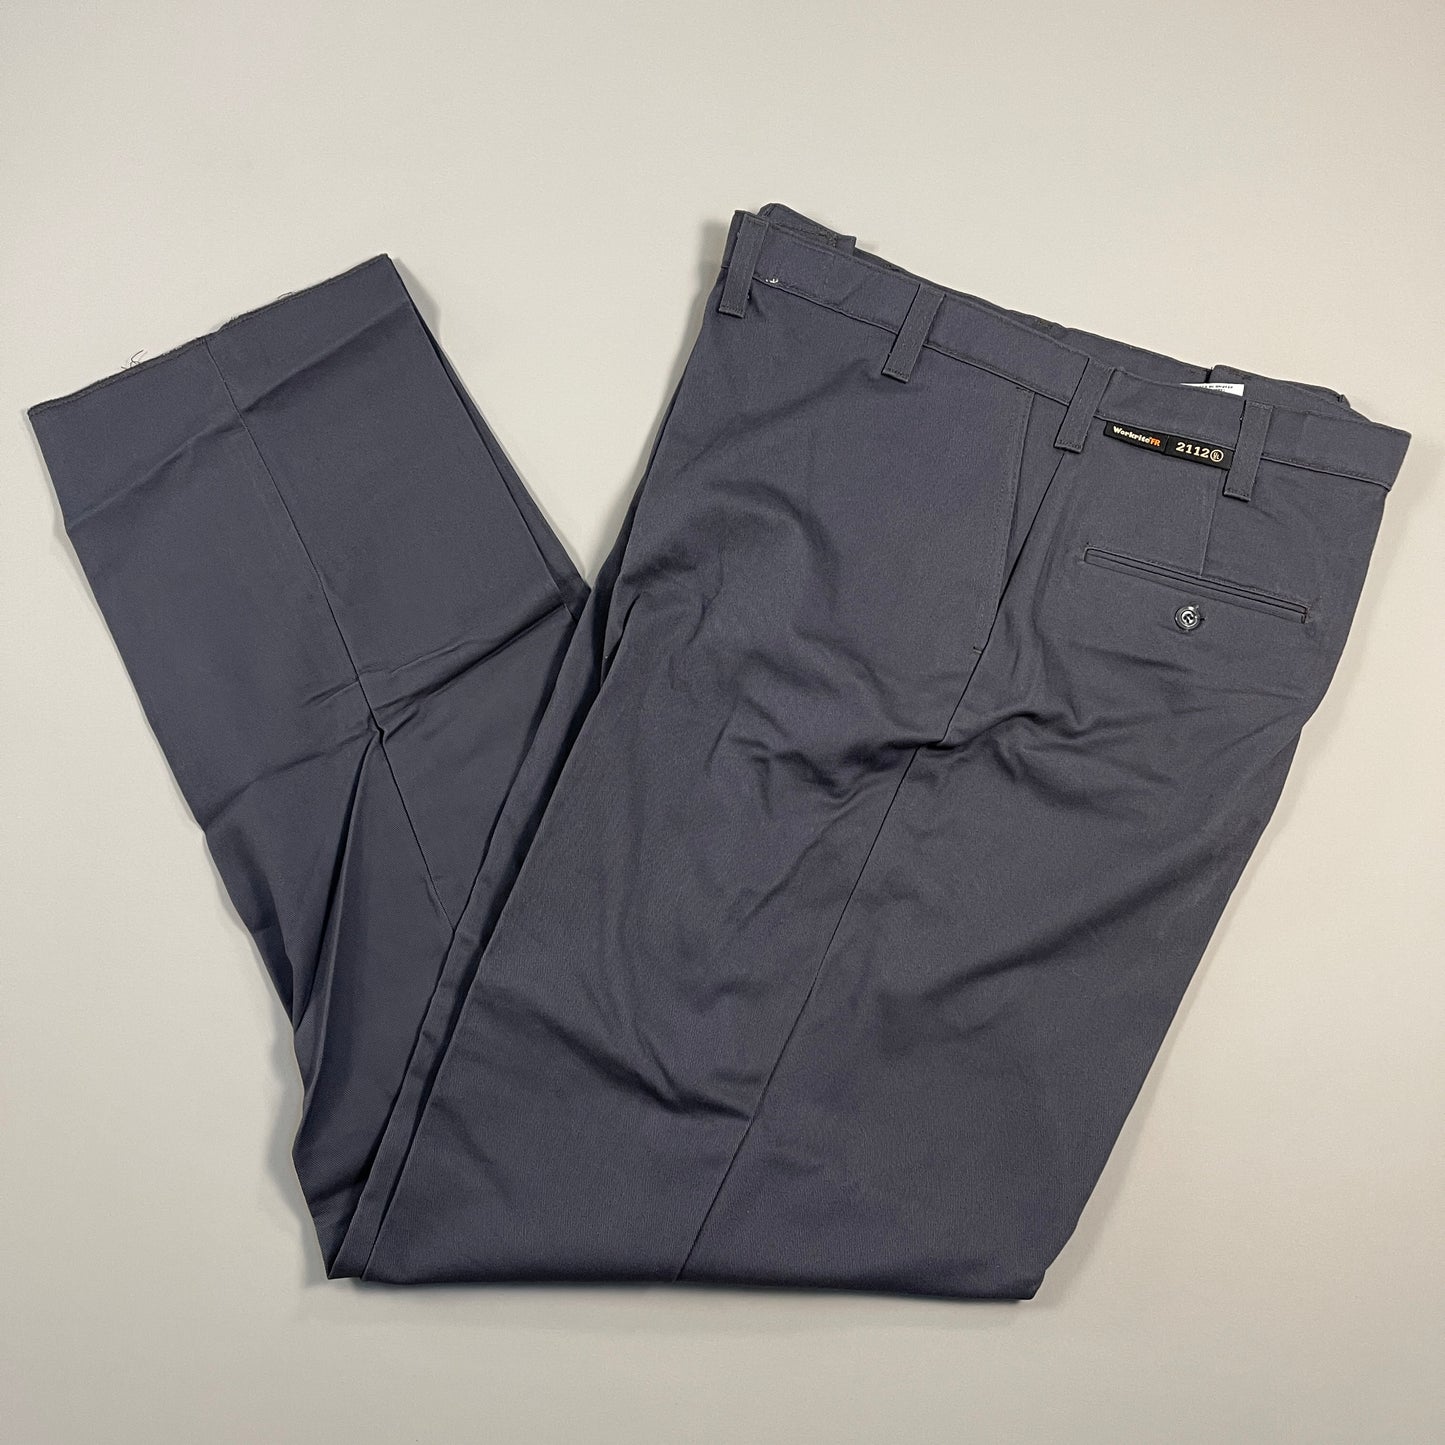 WORKRITE FR Westex UltraSoft Pants Men's Sz 50x37 Charcoal Gray 431UT95 (New)